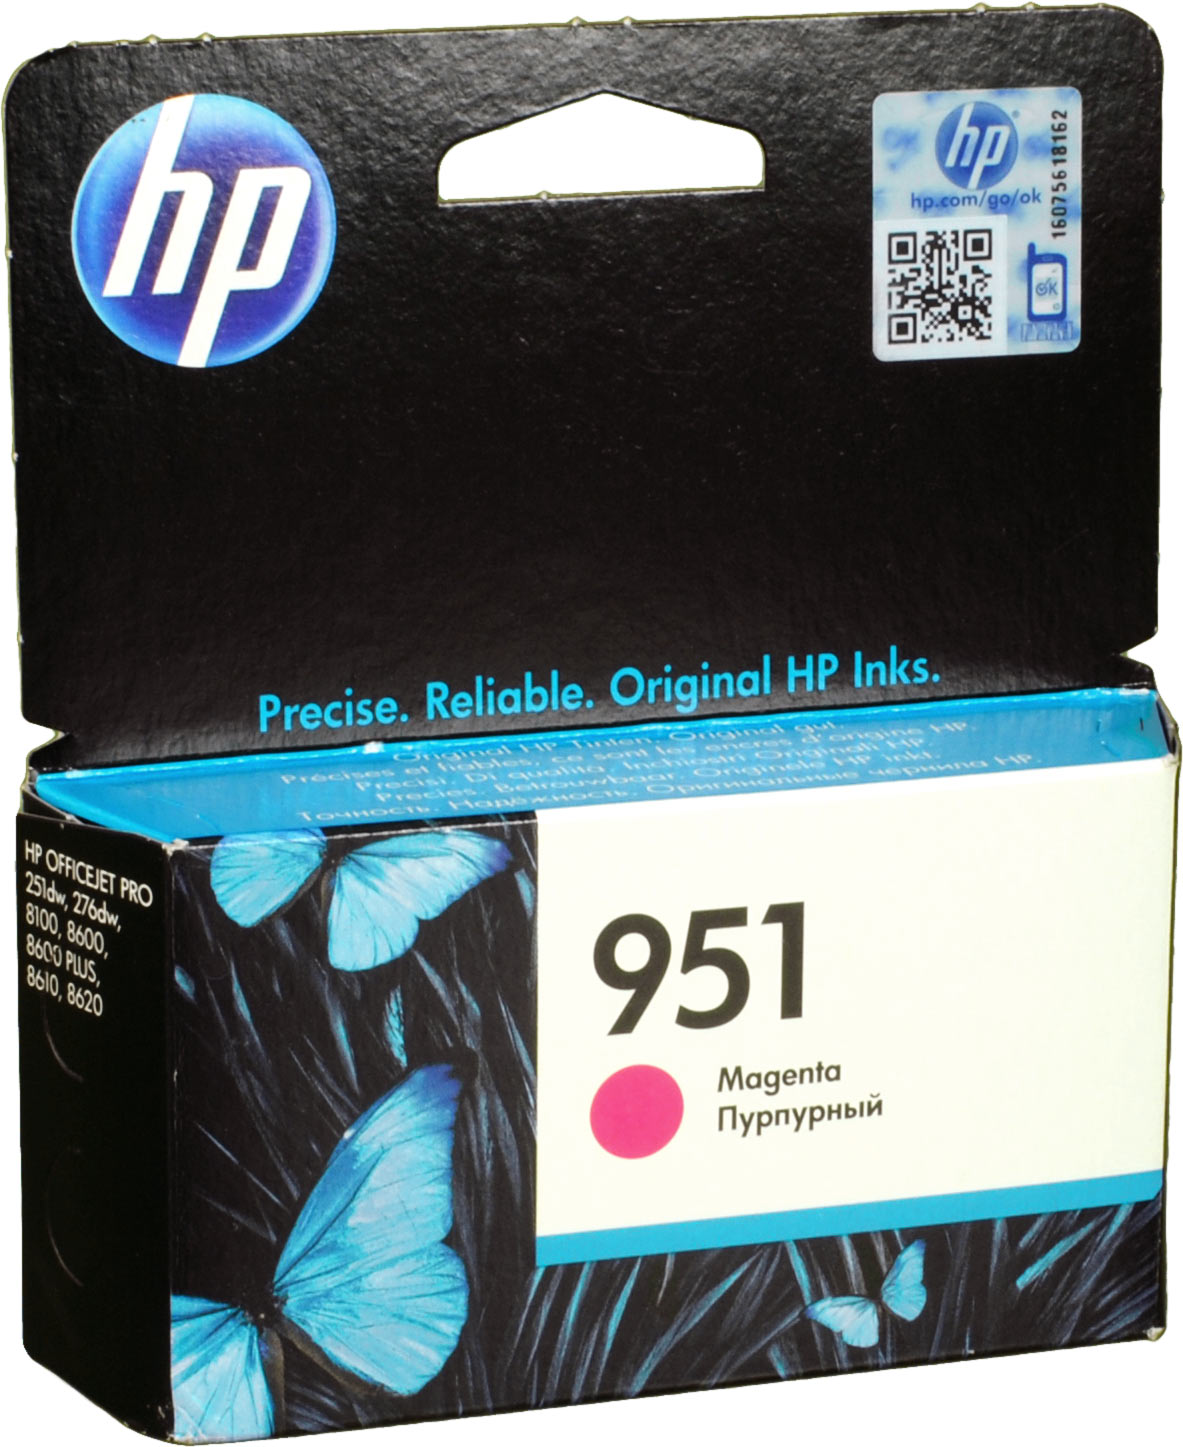 HP Tinte CN051AE  951  magenta